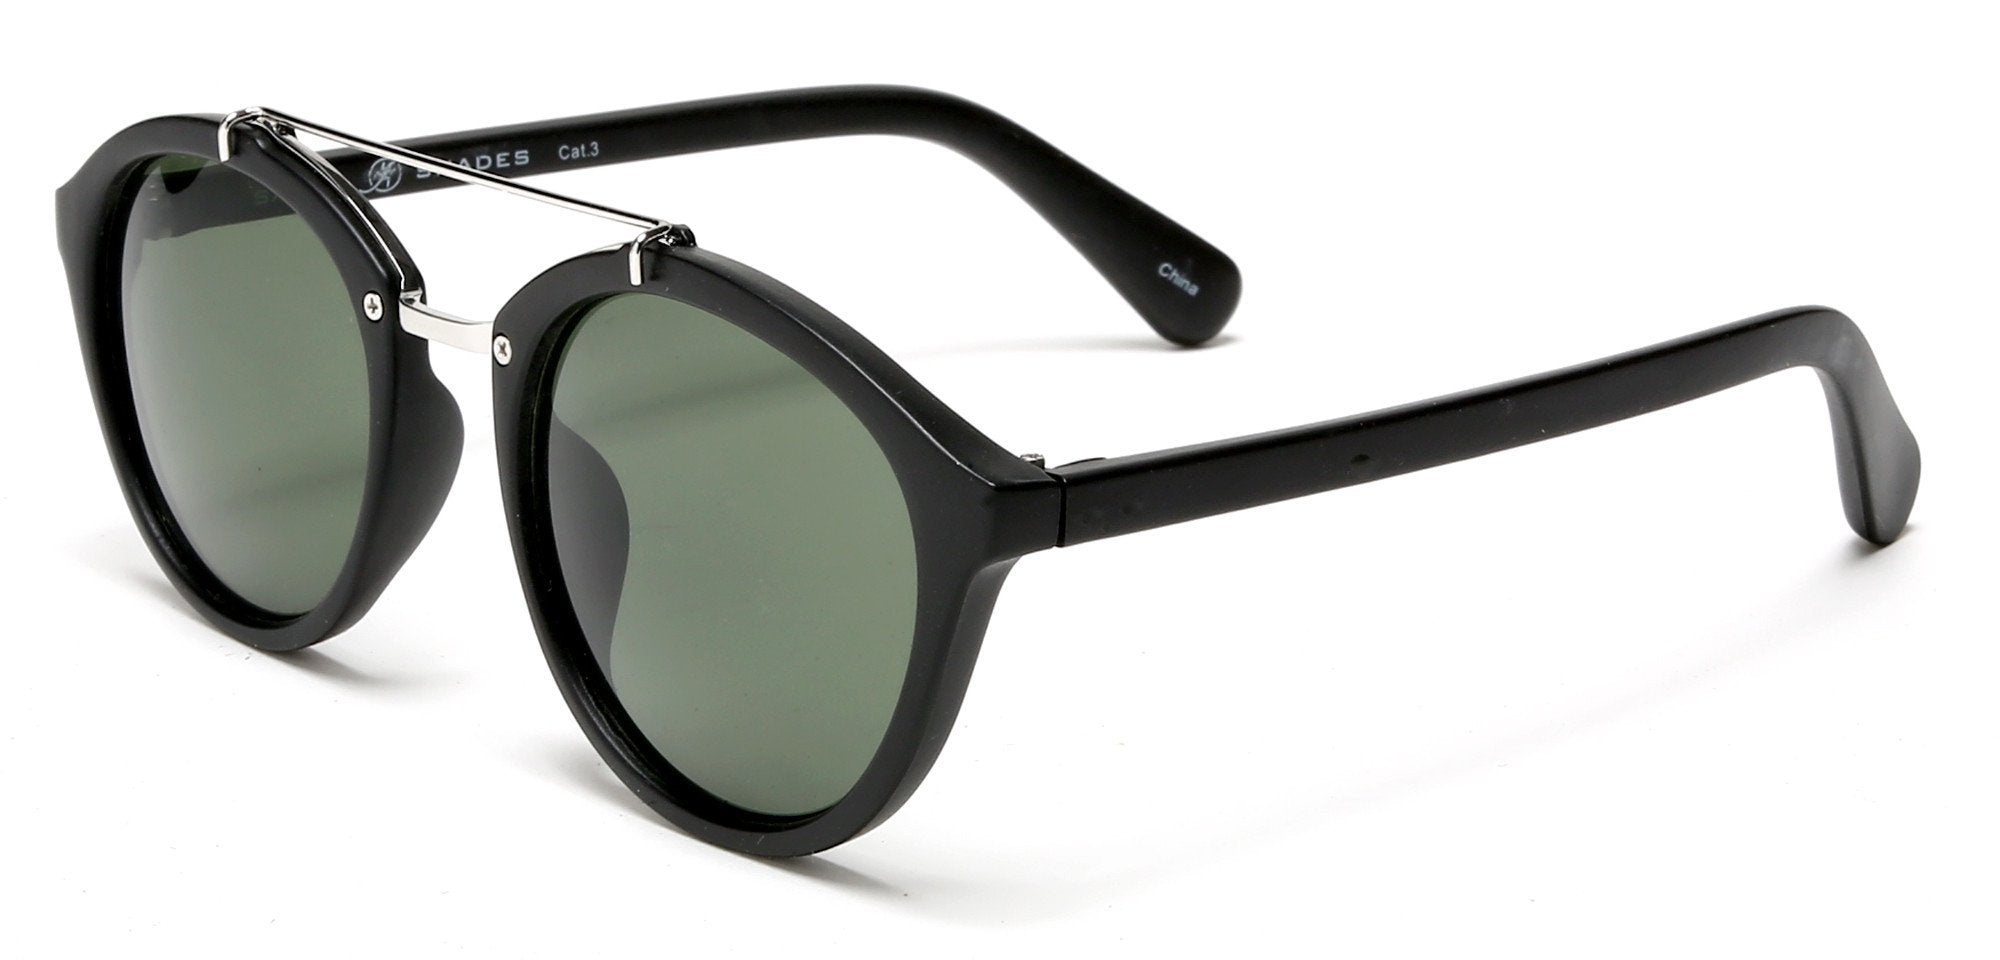 Enzo Fashion Sunglasses Black-Samba Shades